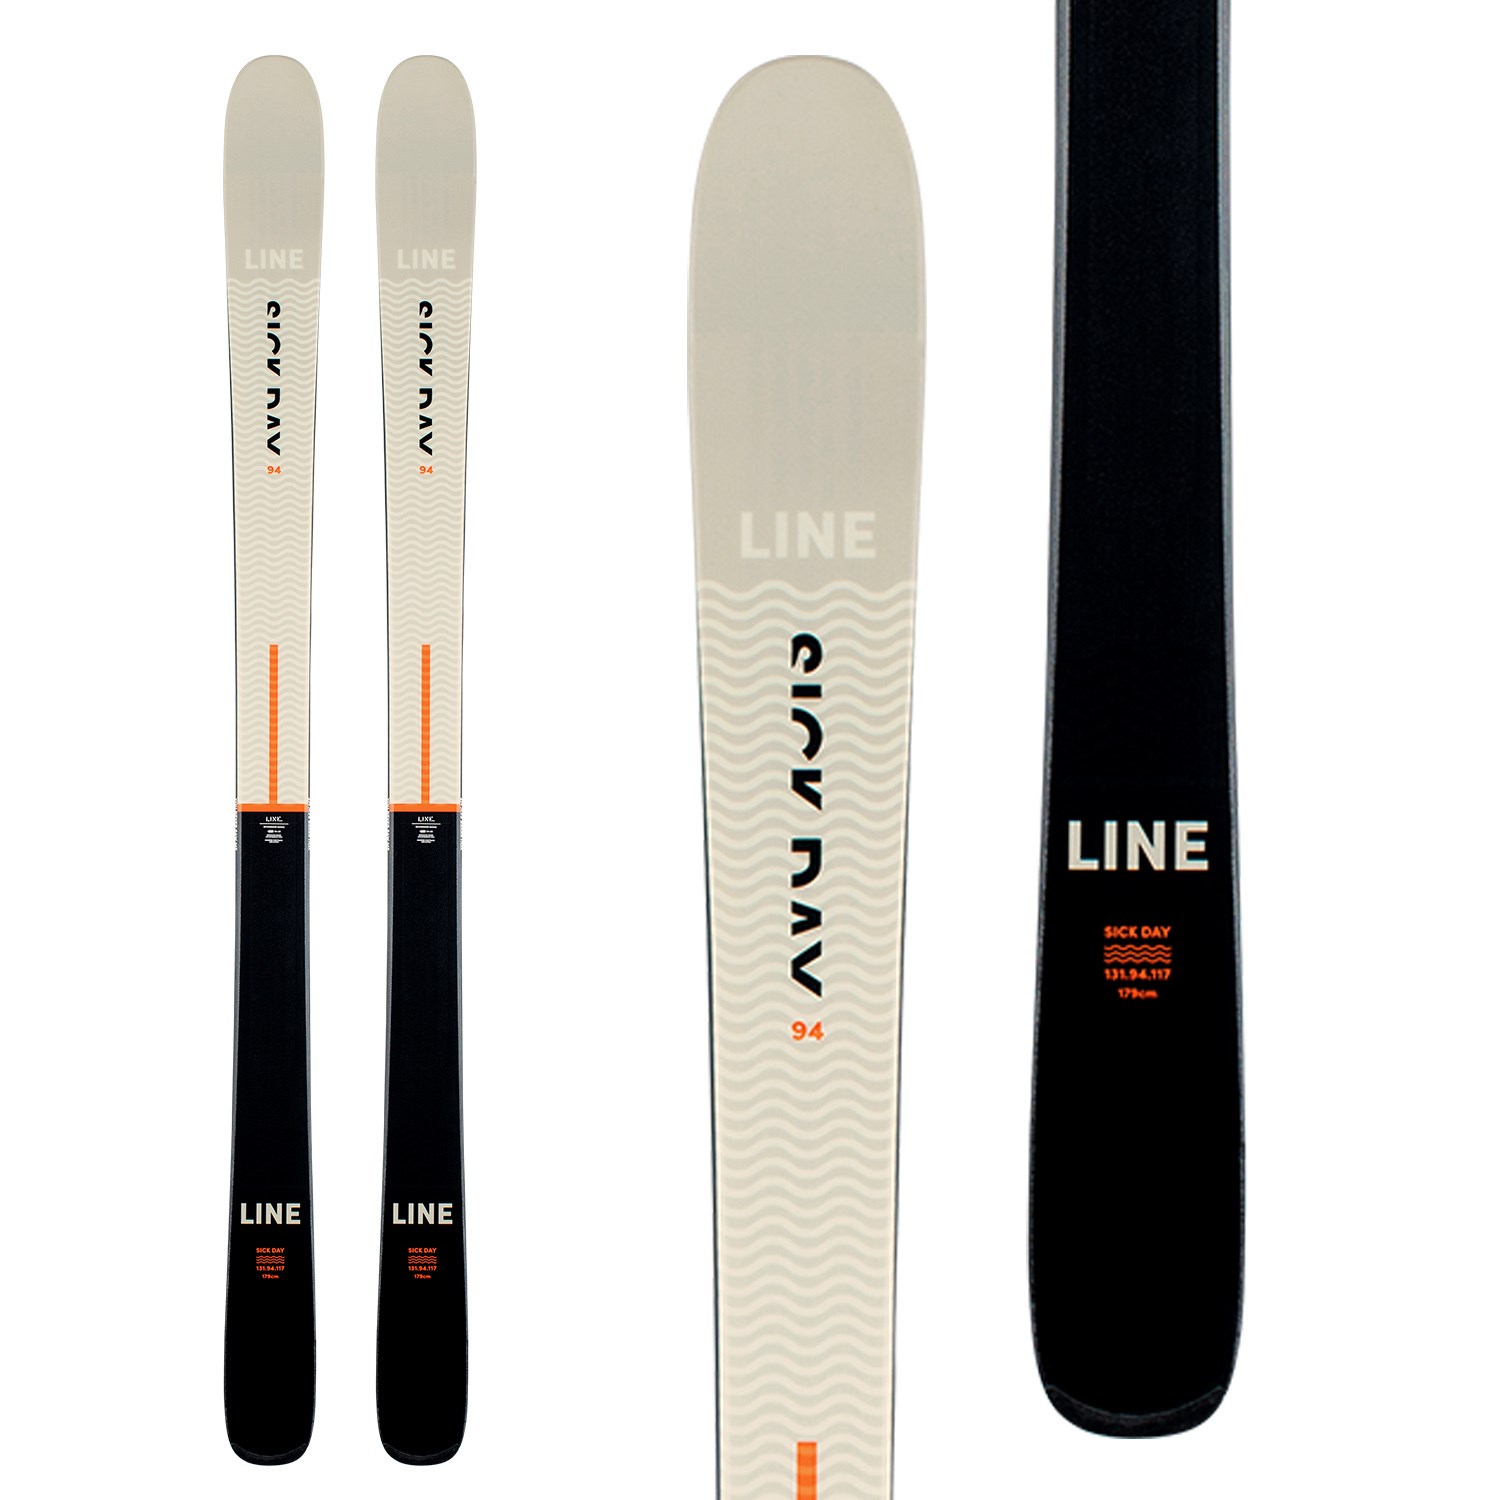 Line Skis Sick Day 94 Skis 2021 | evo